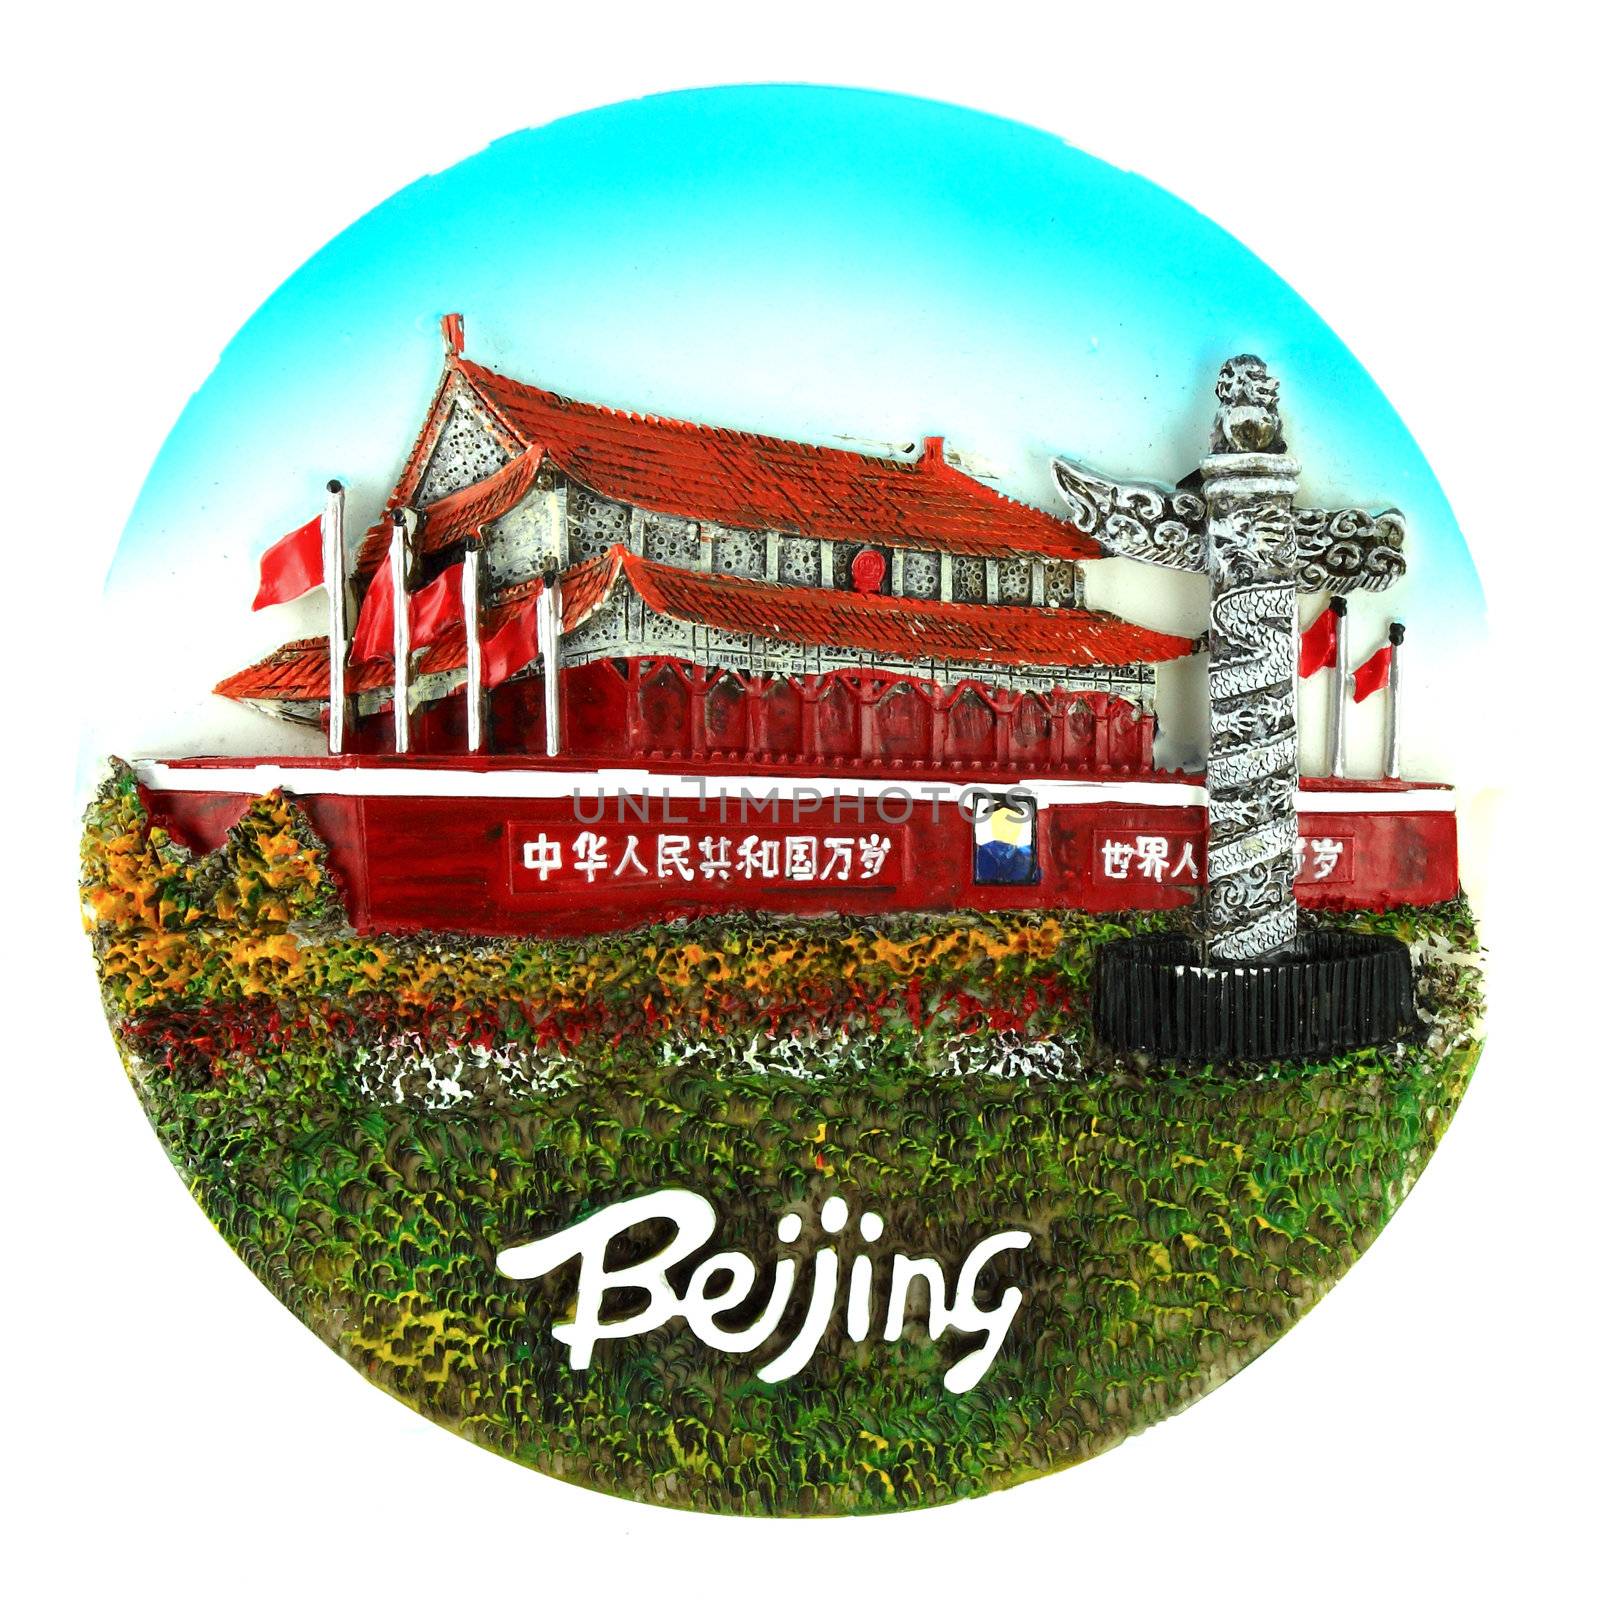 the art of Beijing on dish by geargodz